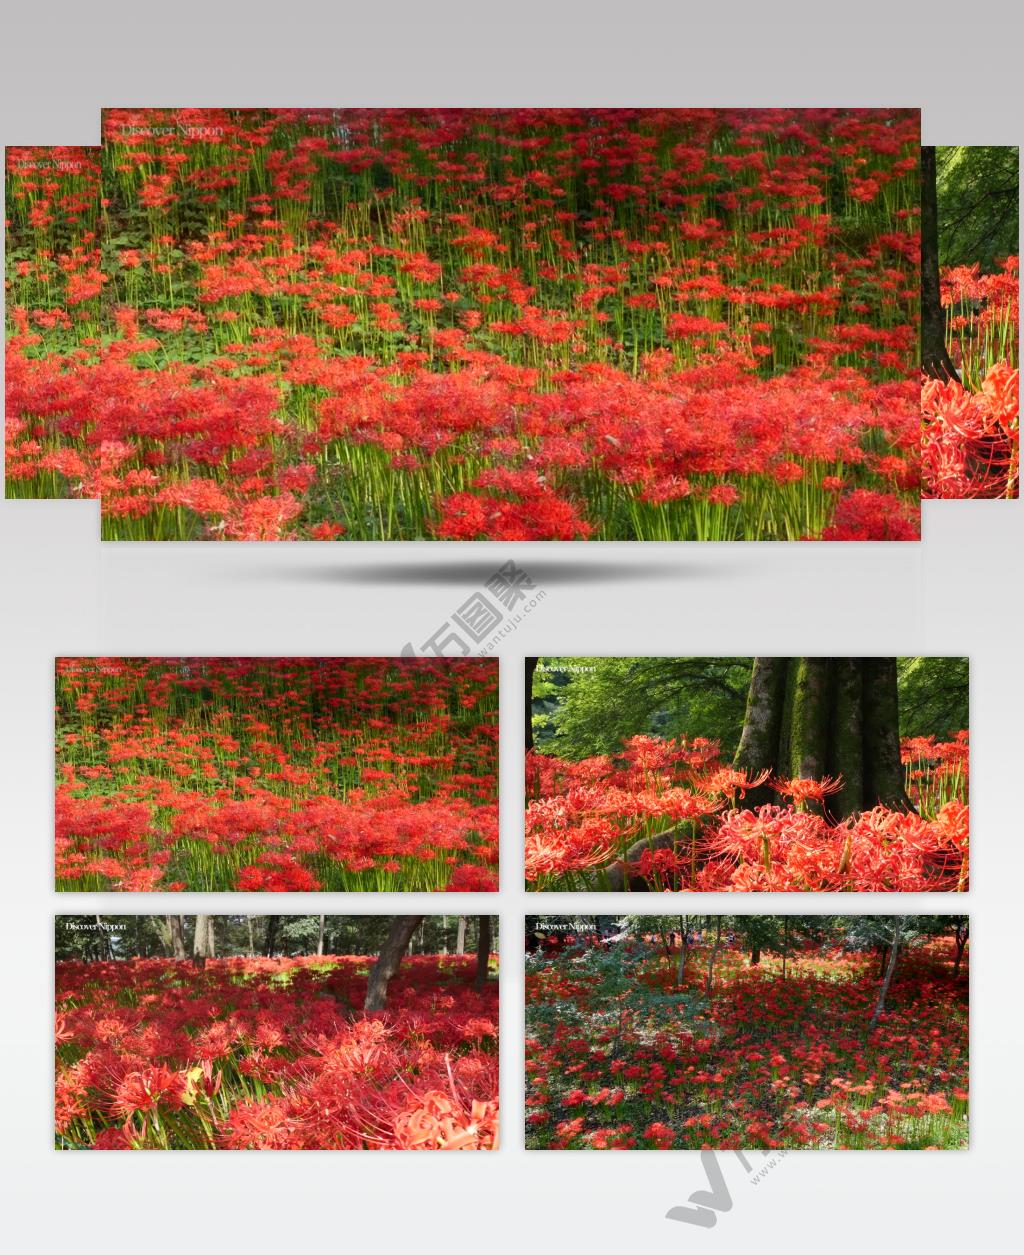 ［4k］ 红色的彼岸花 4K片源 超高清实拍视频素材 自然风景山水花草树木瀑布超清素材